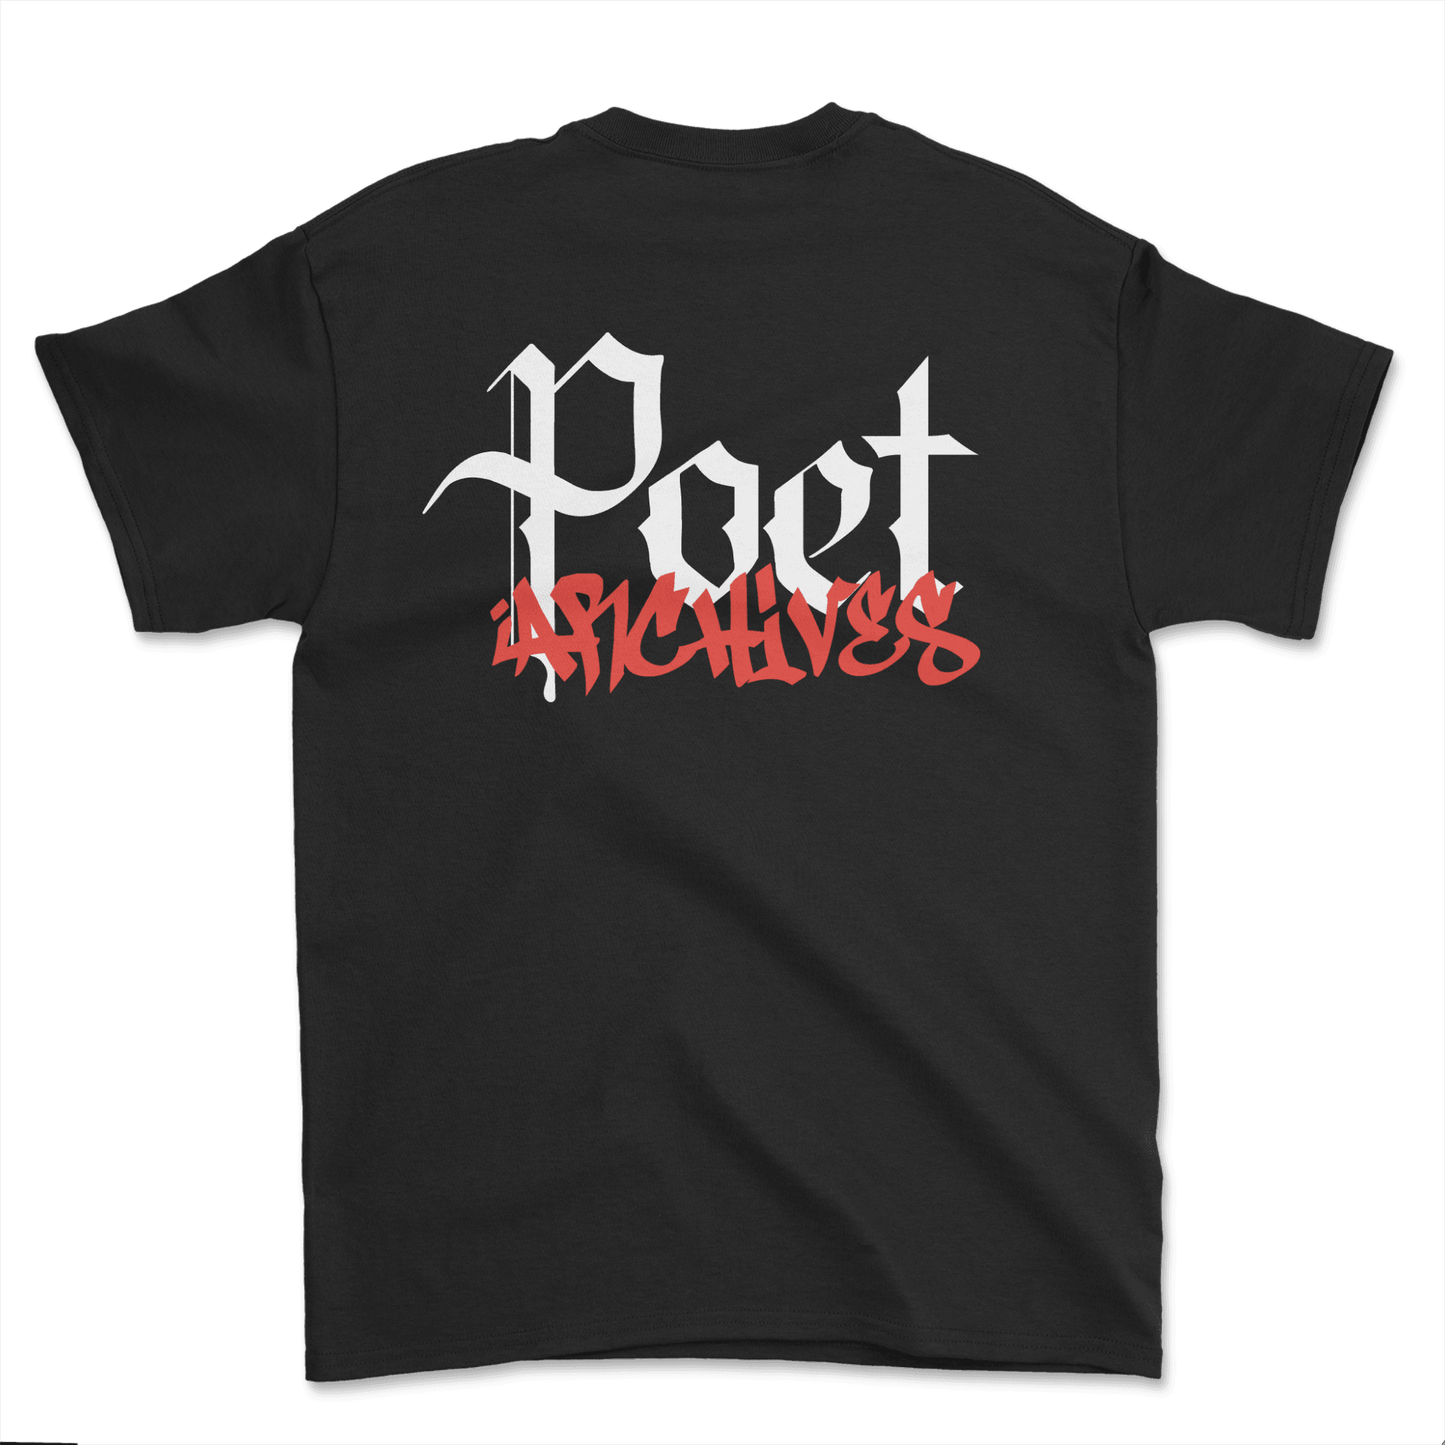 Poet Archives Back Print T-Shirt - Poet Archives